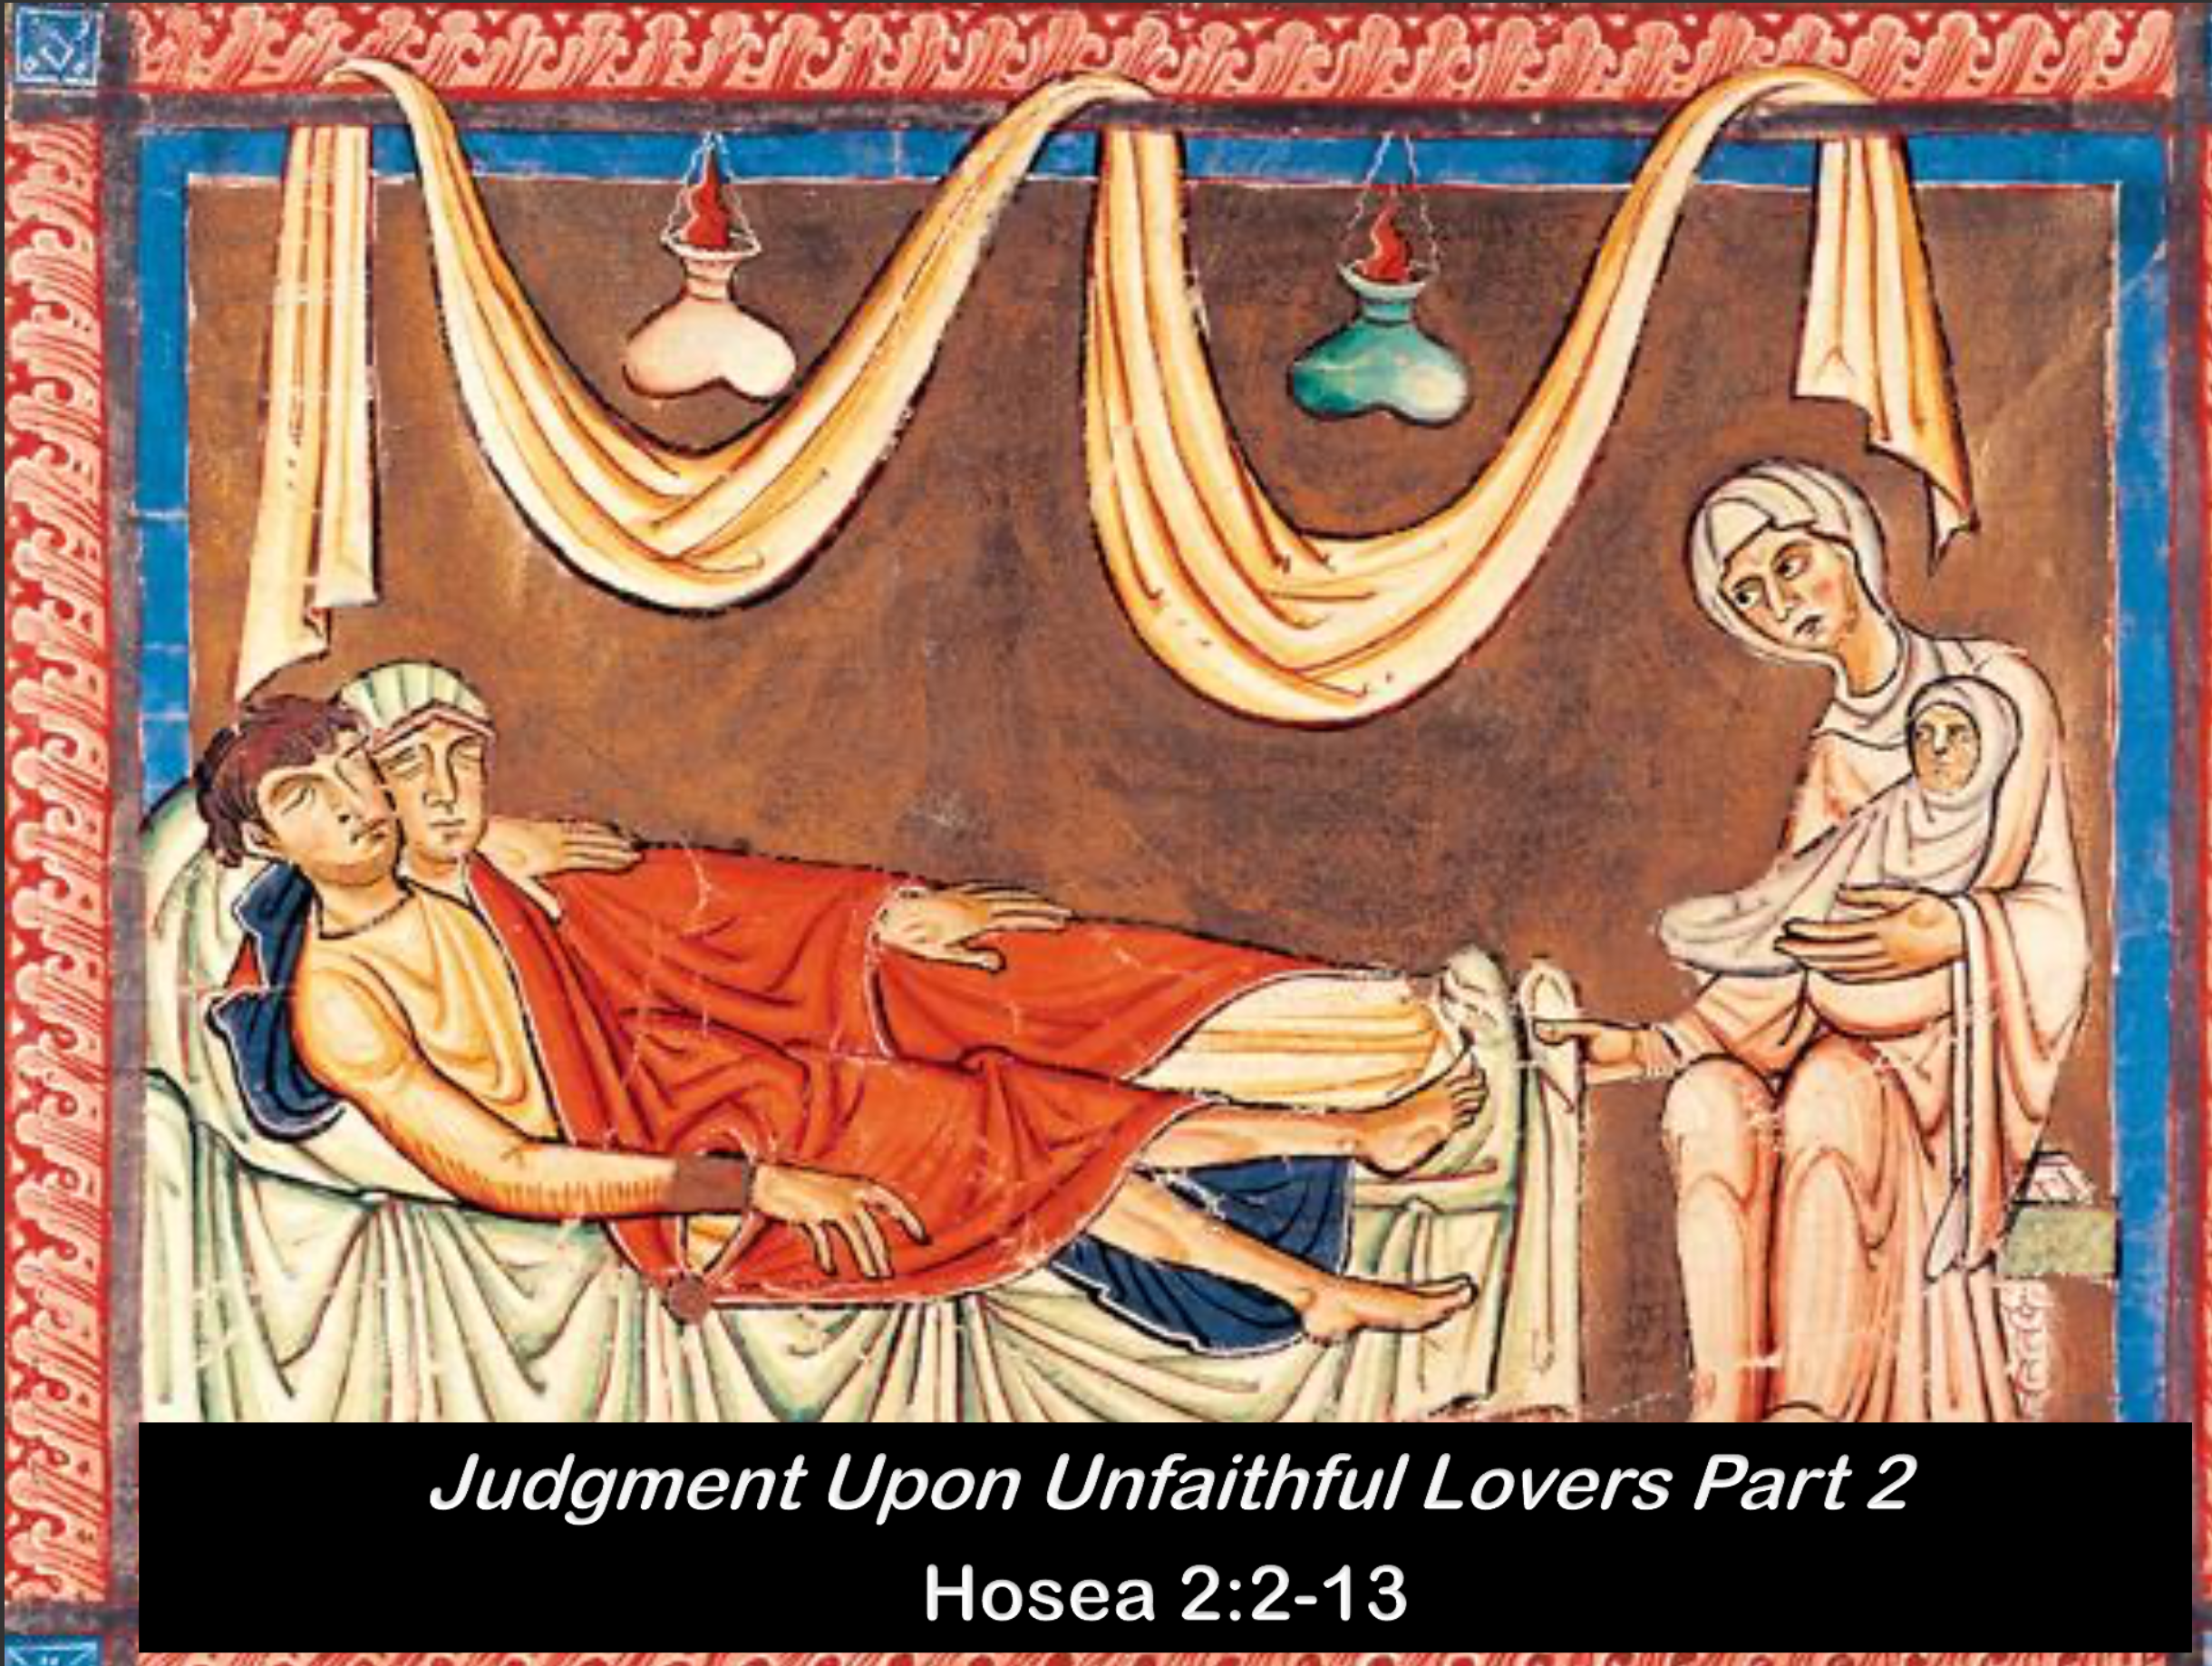 Hosea: Judgement Upon Faithful Lovers Part 2